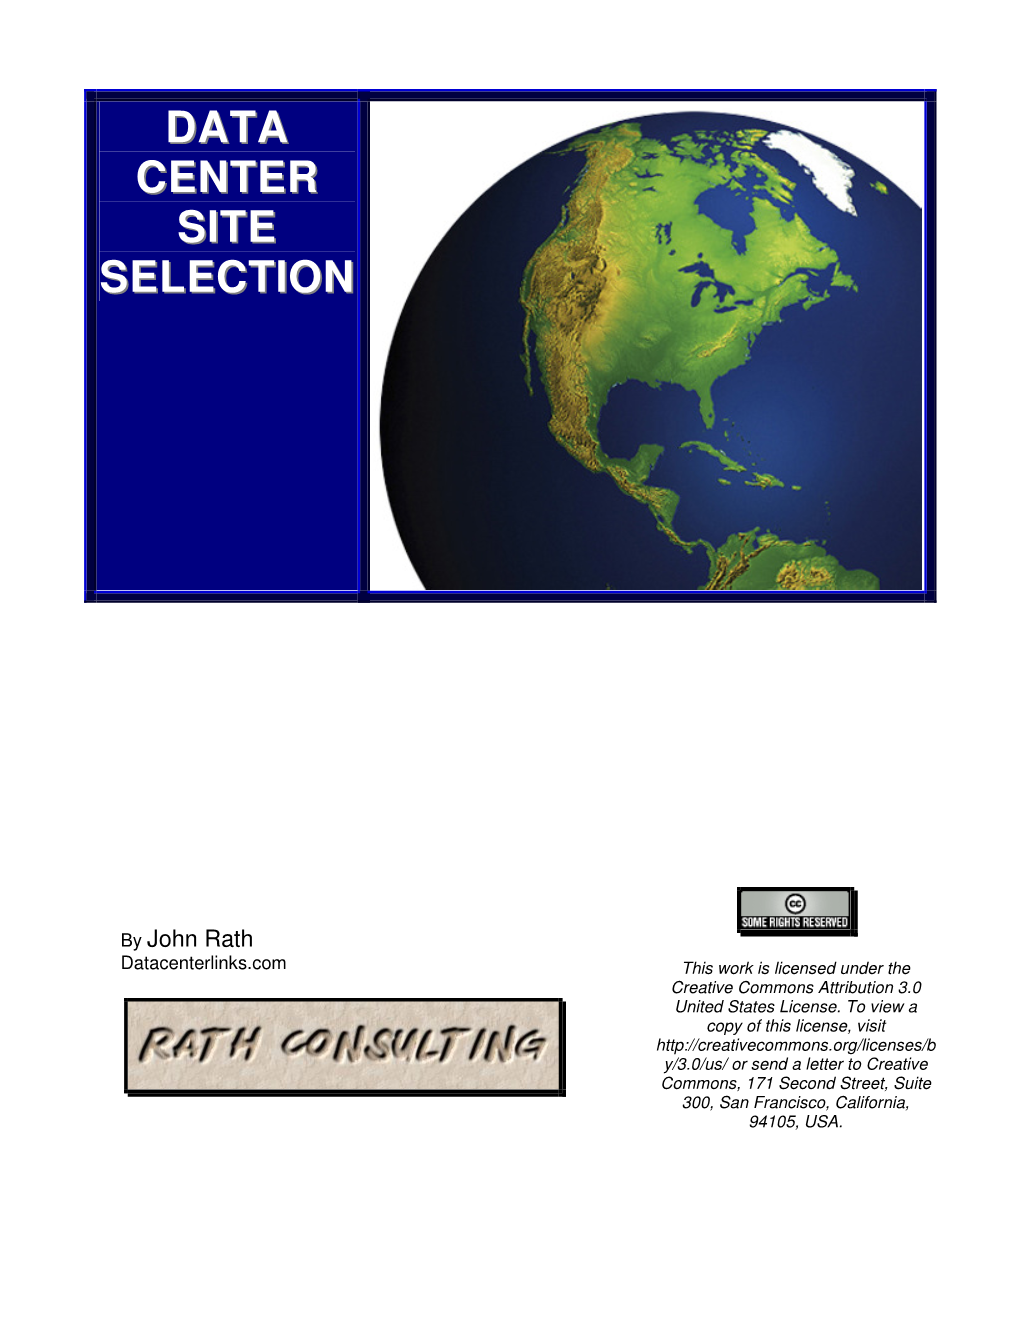 Data Center Site Selection